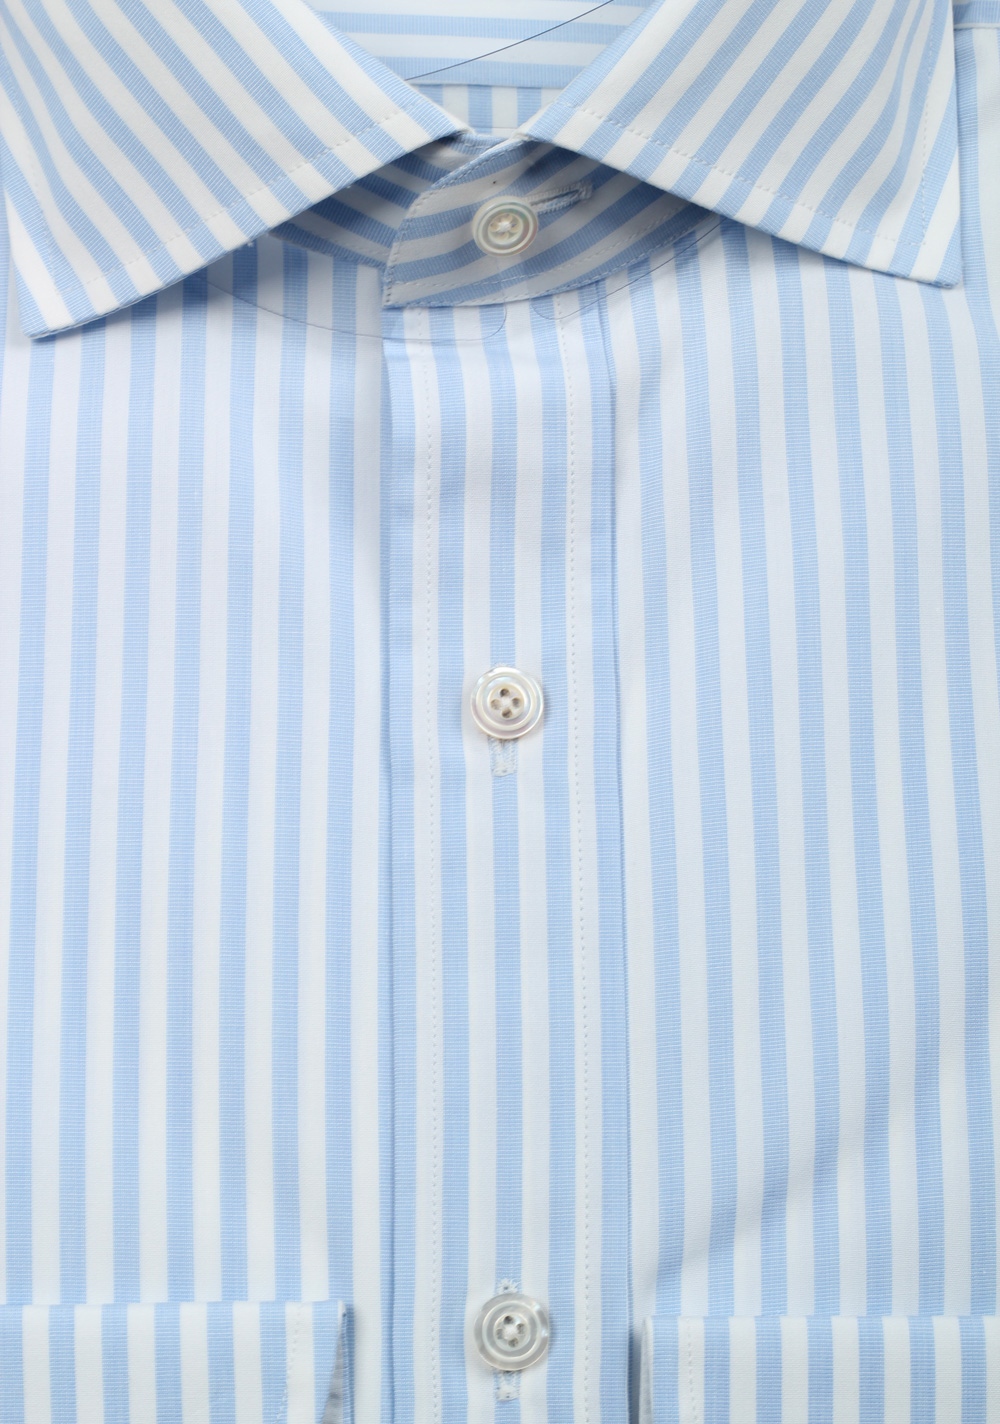 TOM FORD Striped White Blue Shirt Size 39 / 15,5 U.S. | Costume Limité